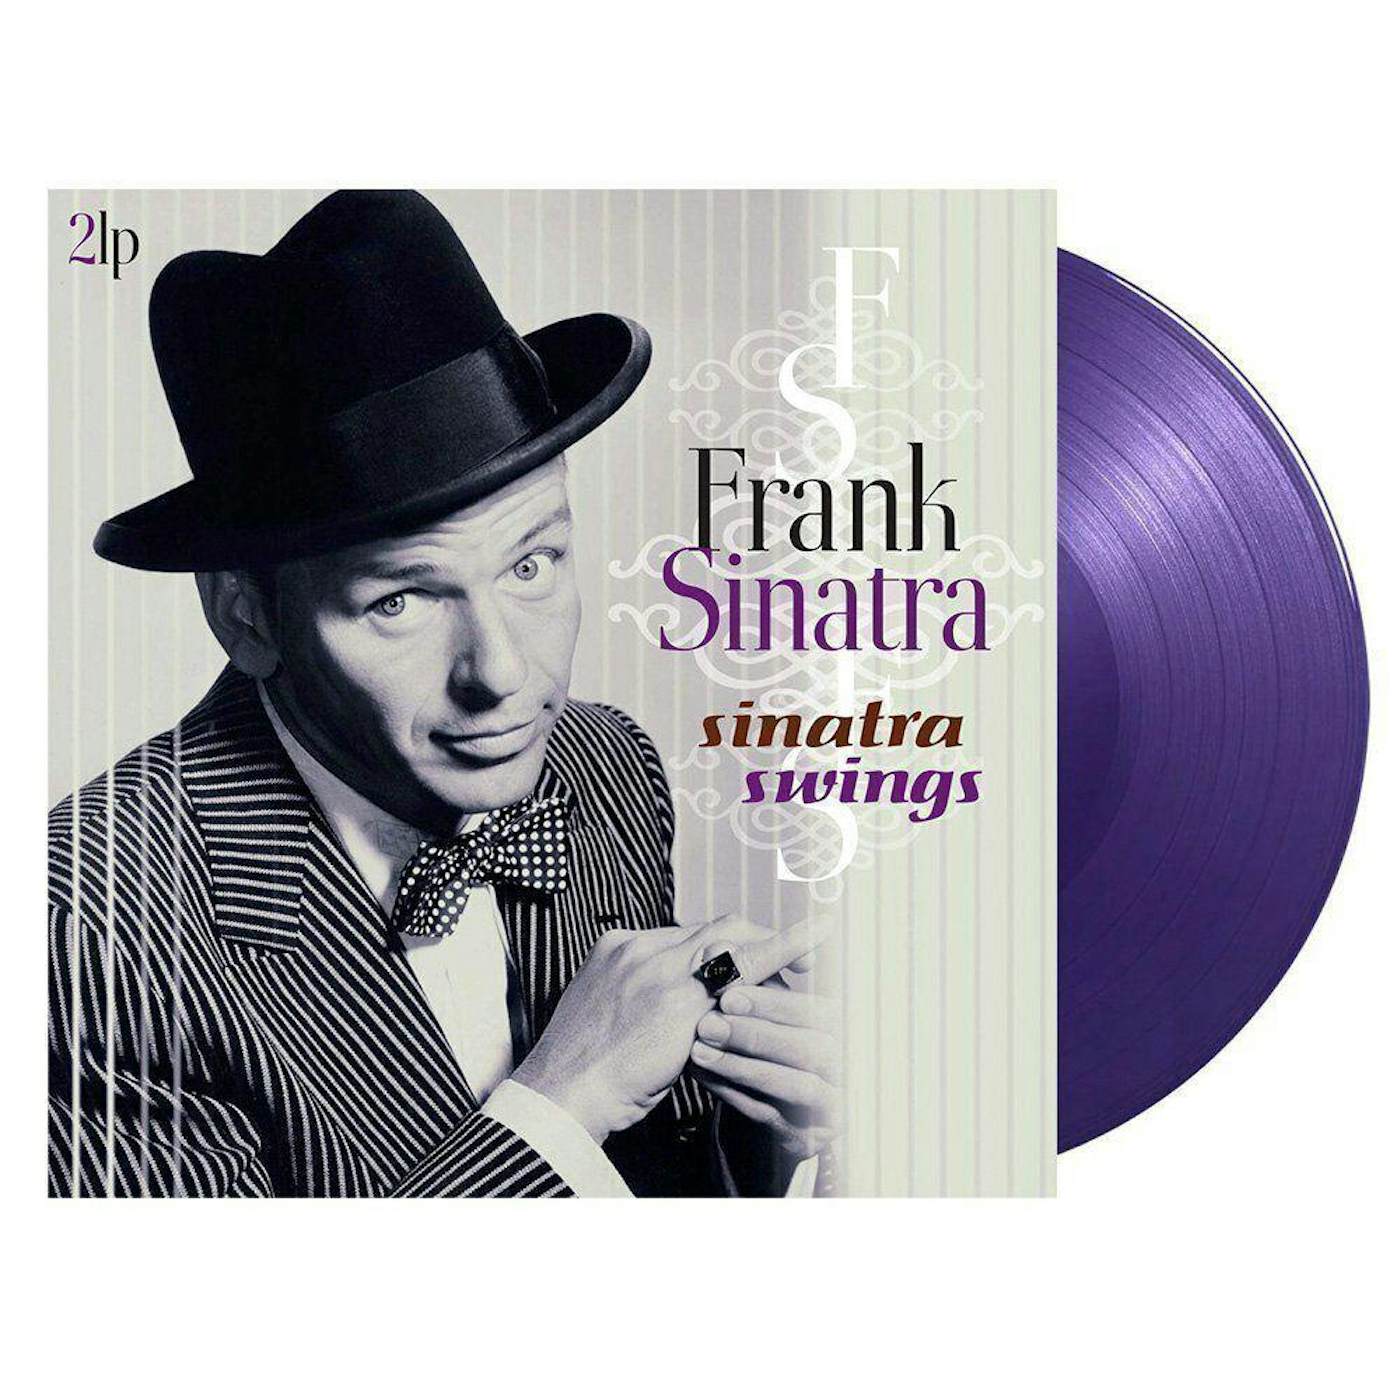 Frank Sinatra Sinatra Swings (Solid Purple) Vinyl Record